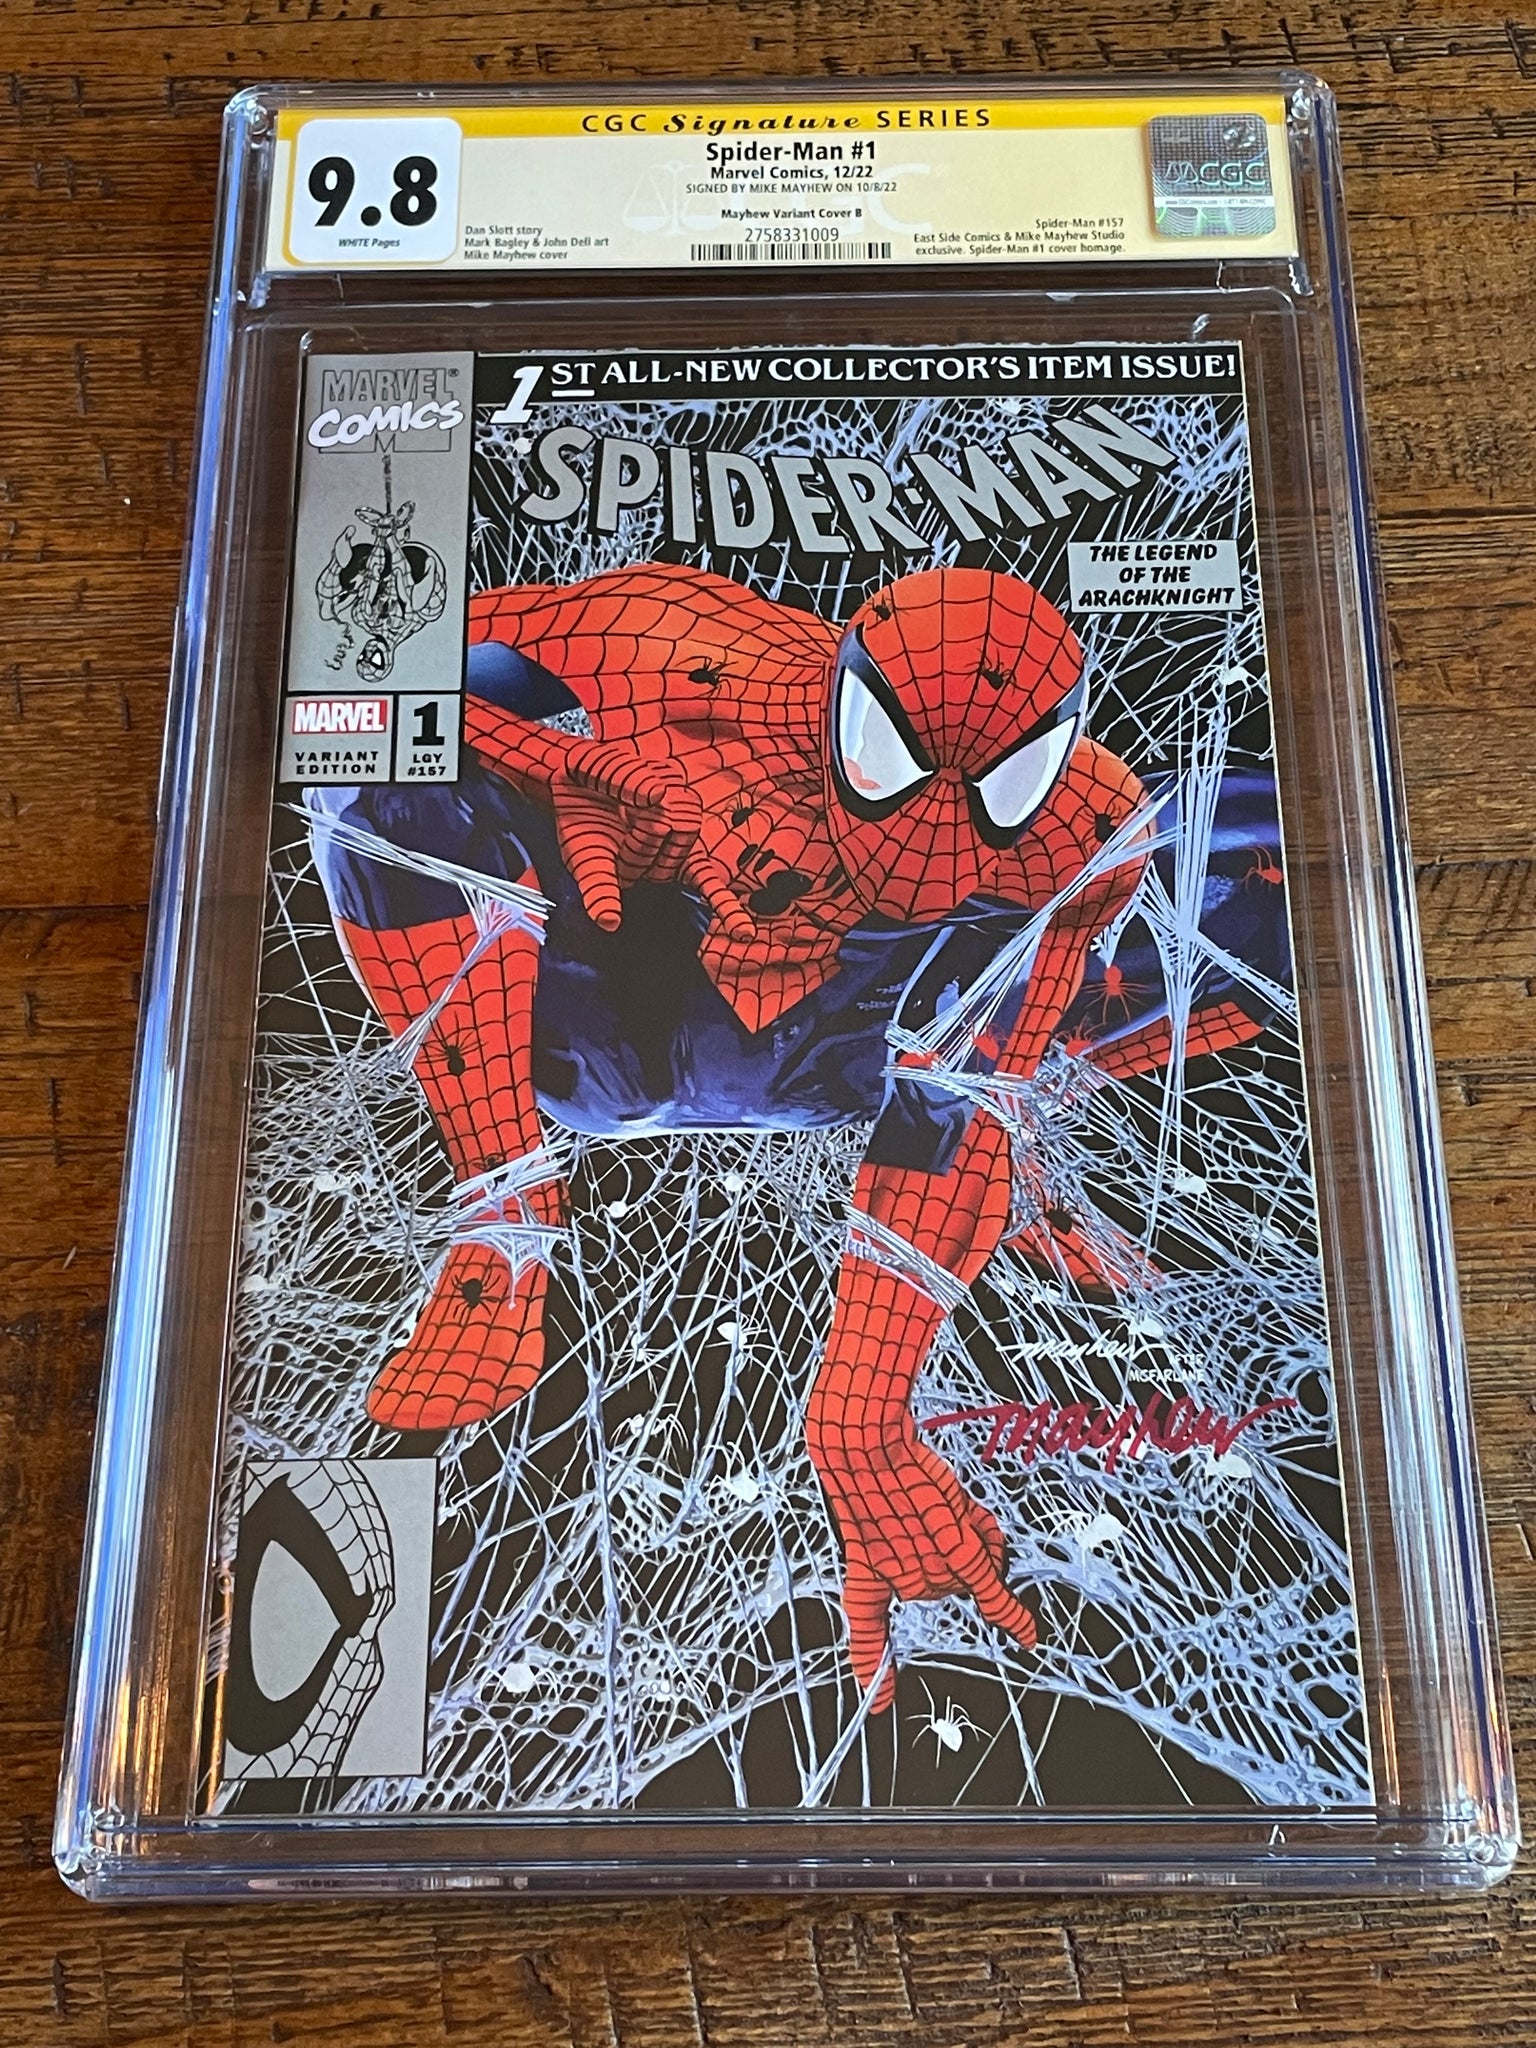 Todd McFarlane Signed Spider-Man CGC SS 9.8 Box